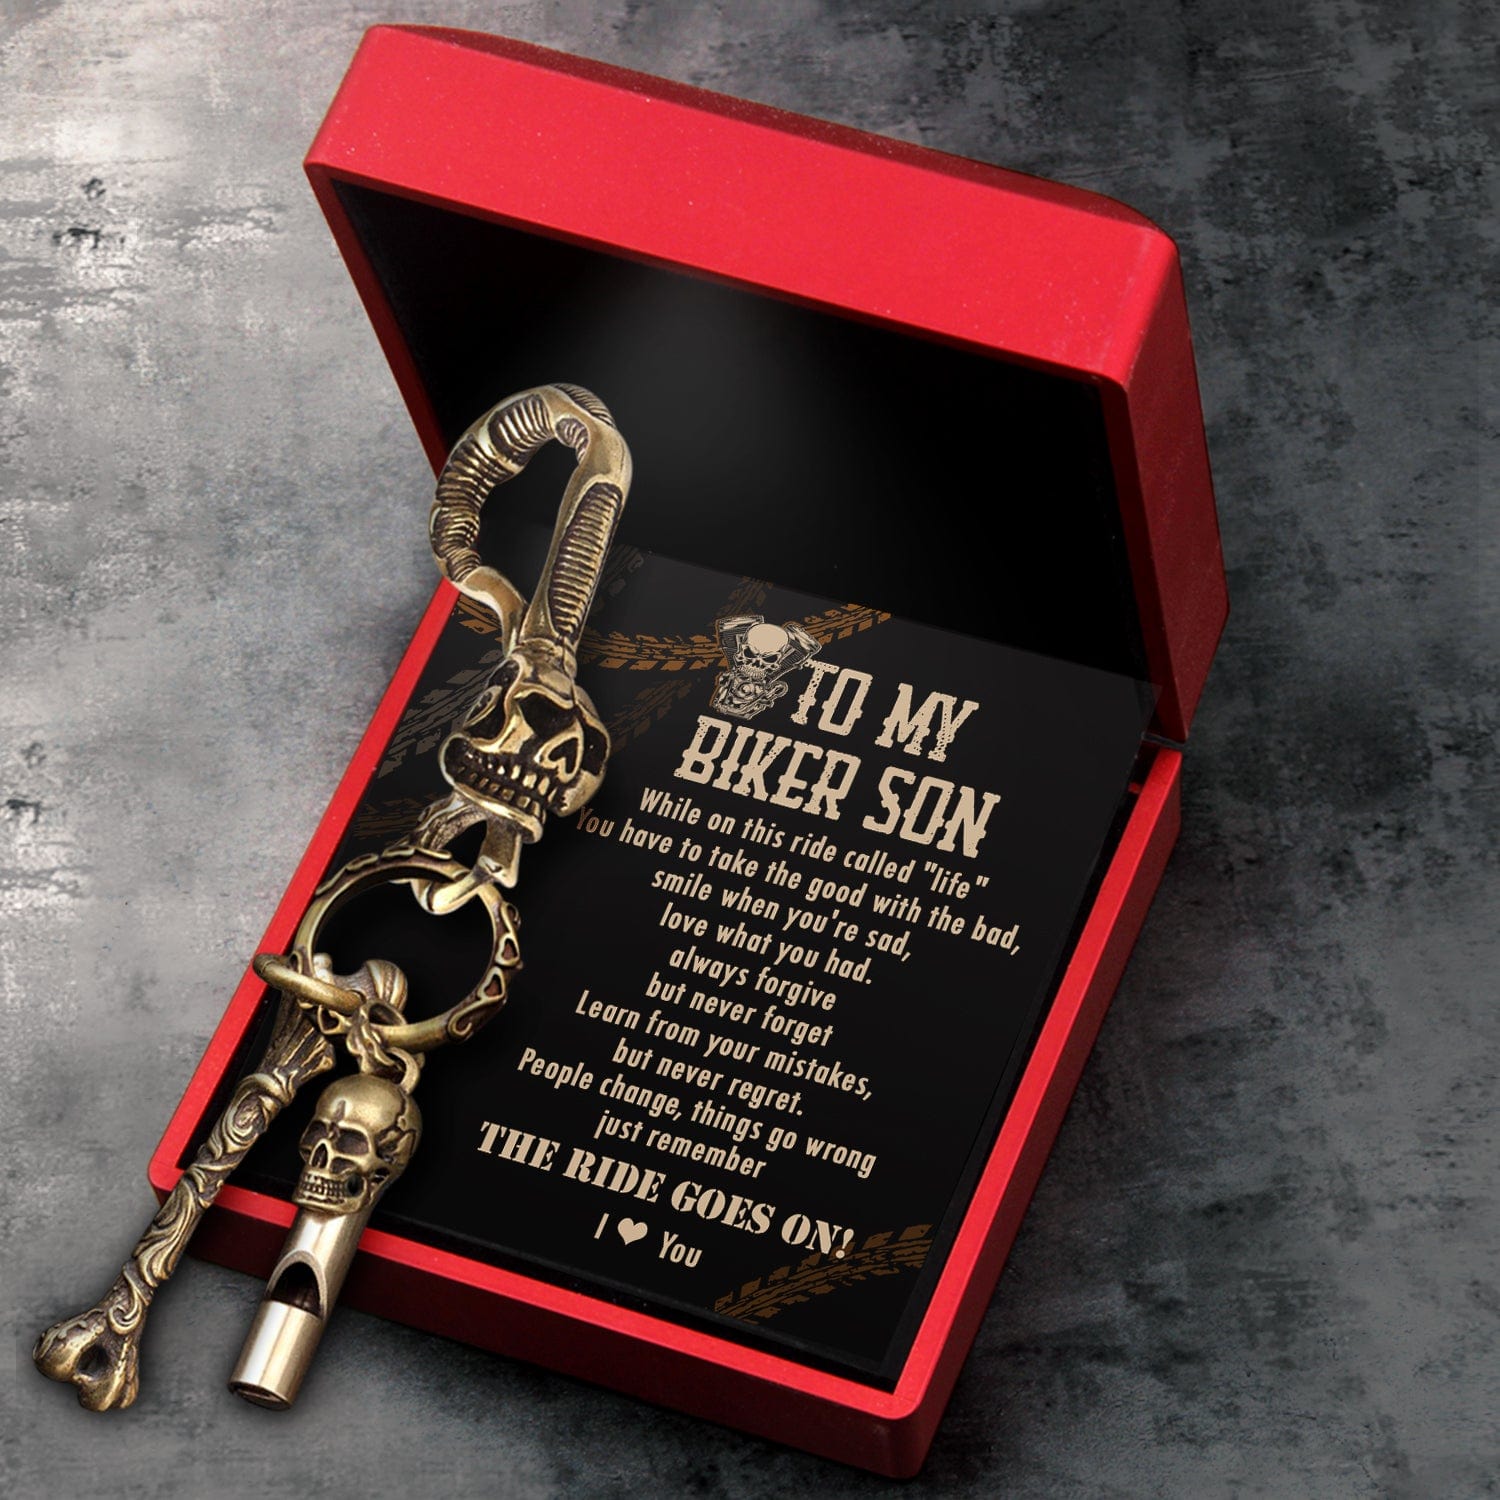 Skull Keychain Holder - Biker - To My Old Man - We Wanna Go Everywhere -  Gifts Holder